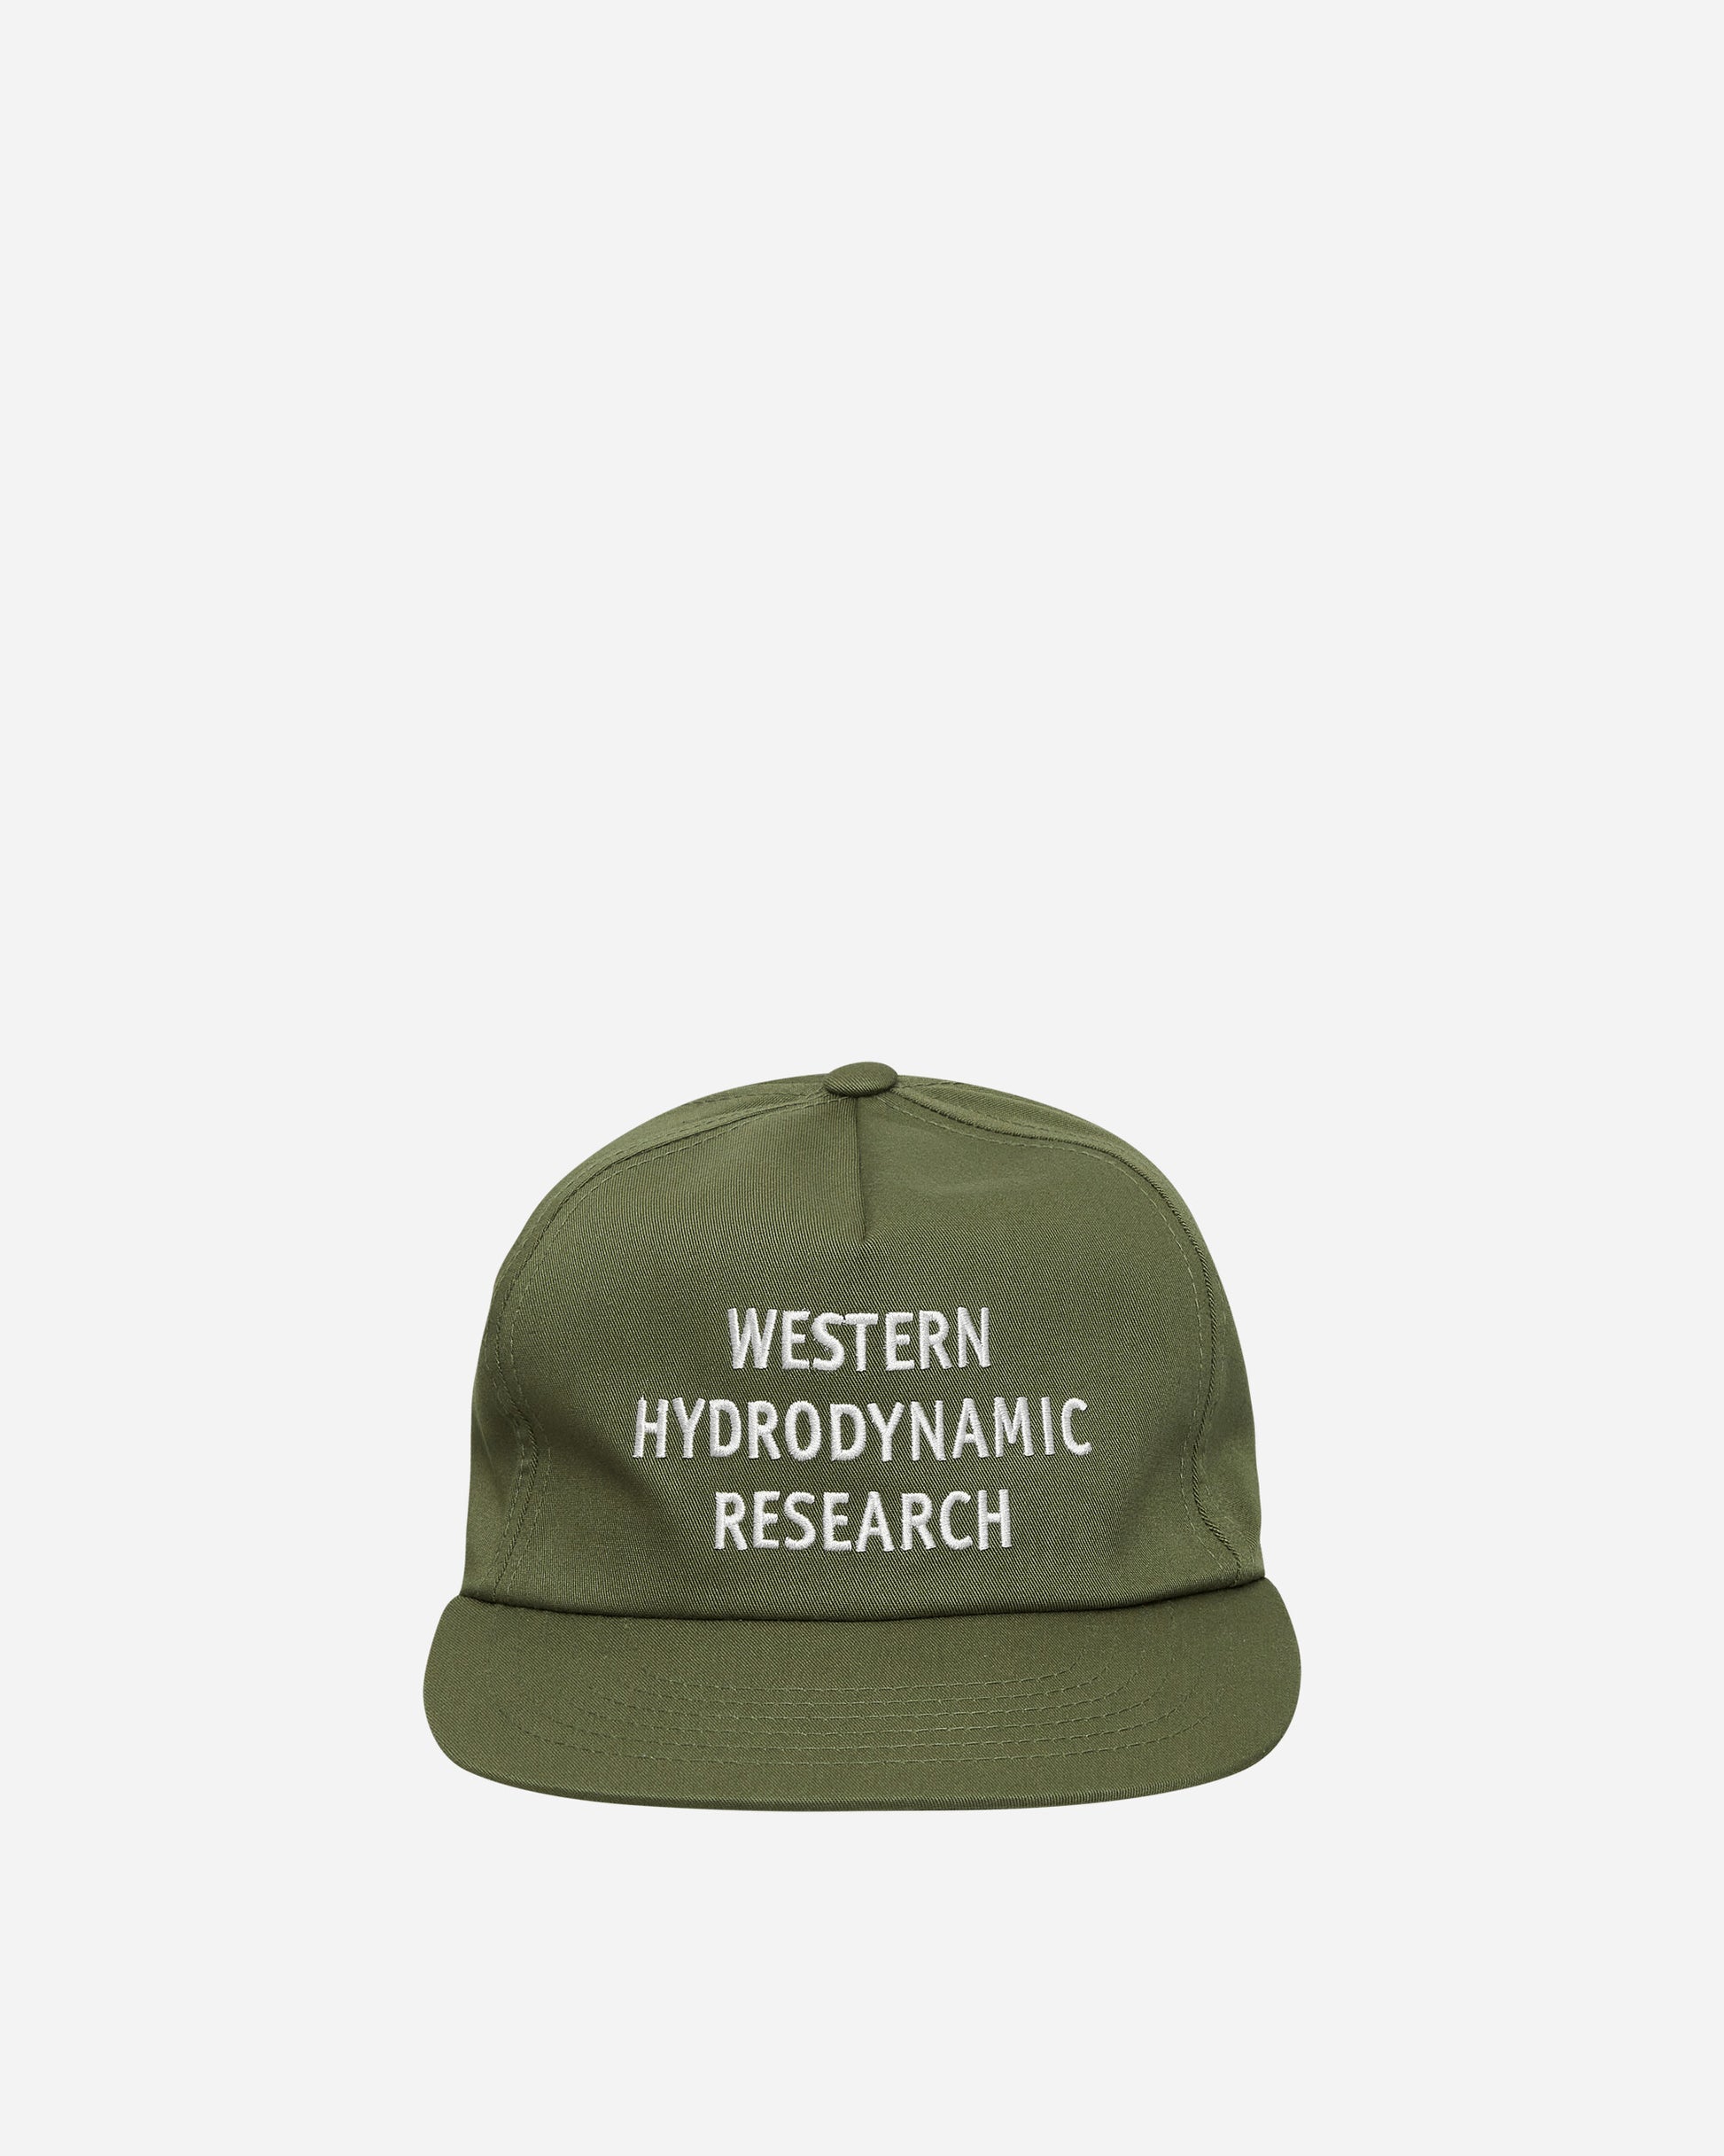 WESTERN HYDRODYNAMIC RESEARCH Promo Hat Green Olive Hats Caps MWHR24SPSU4001 GREENOLIVE